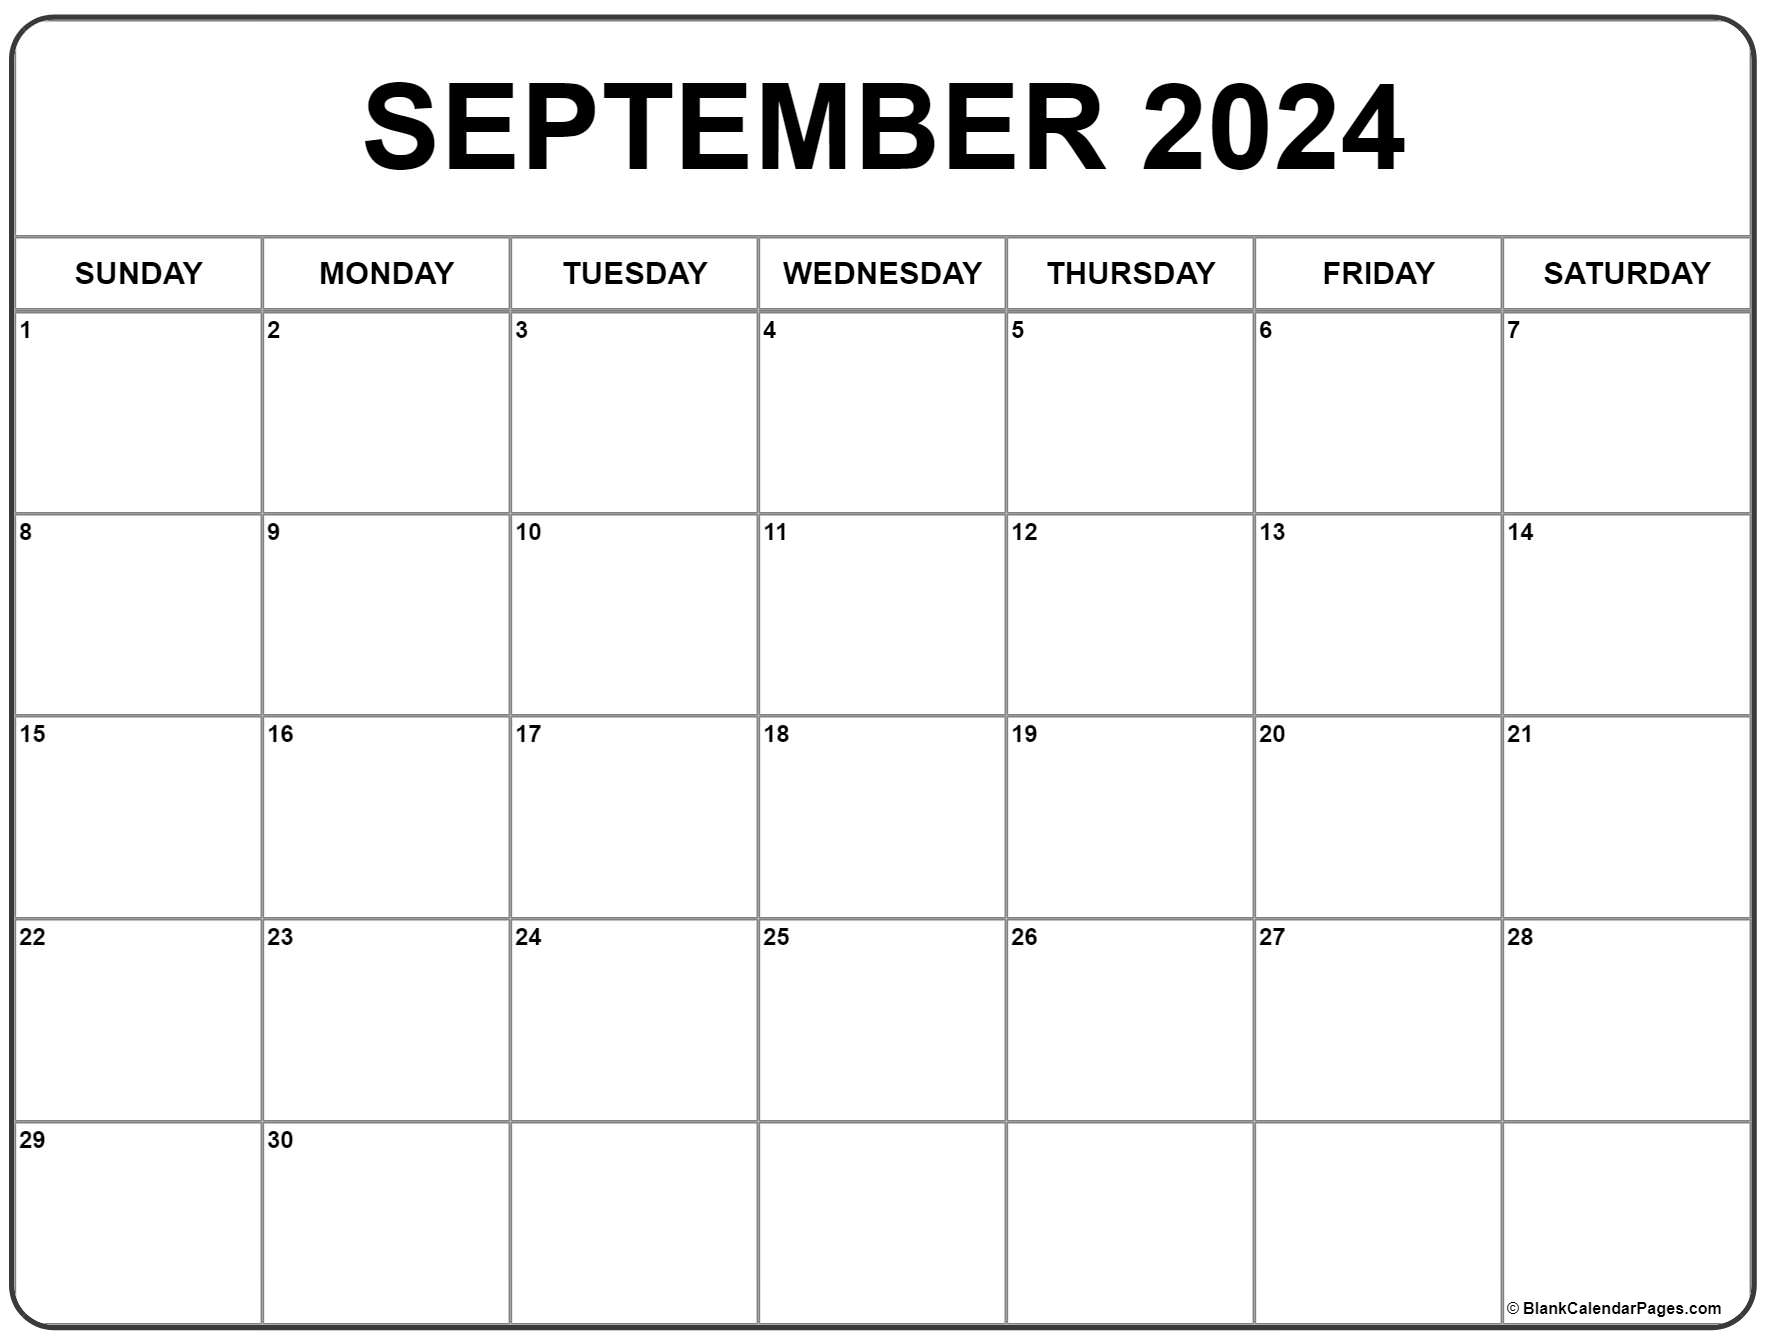 September 2024 Calendar | Free Printable Calendar for Sept 2024 Printable Calendar